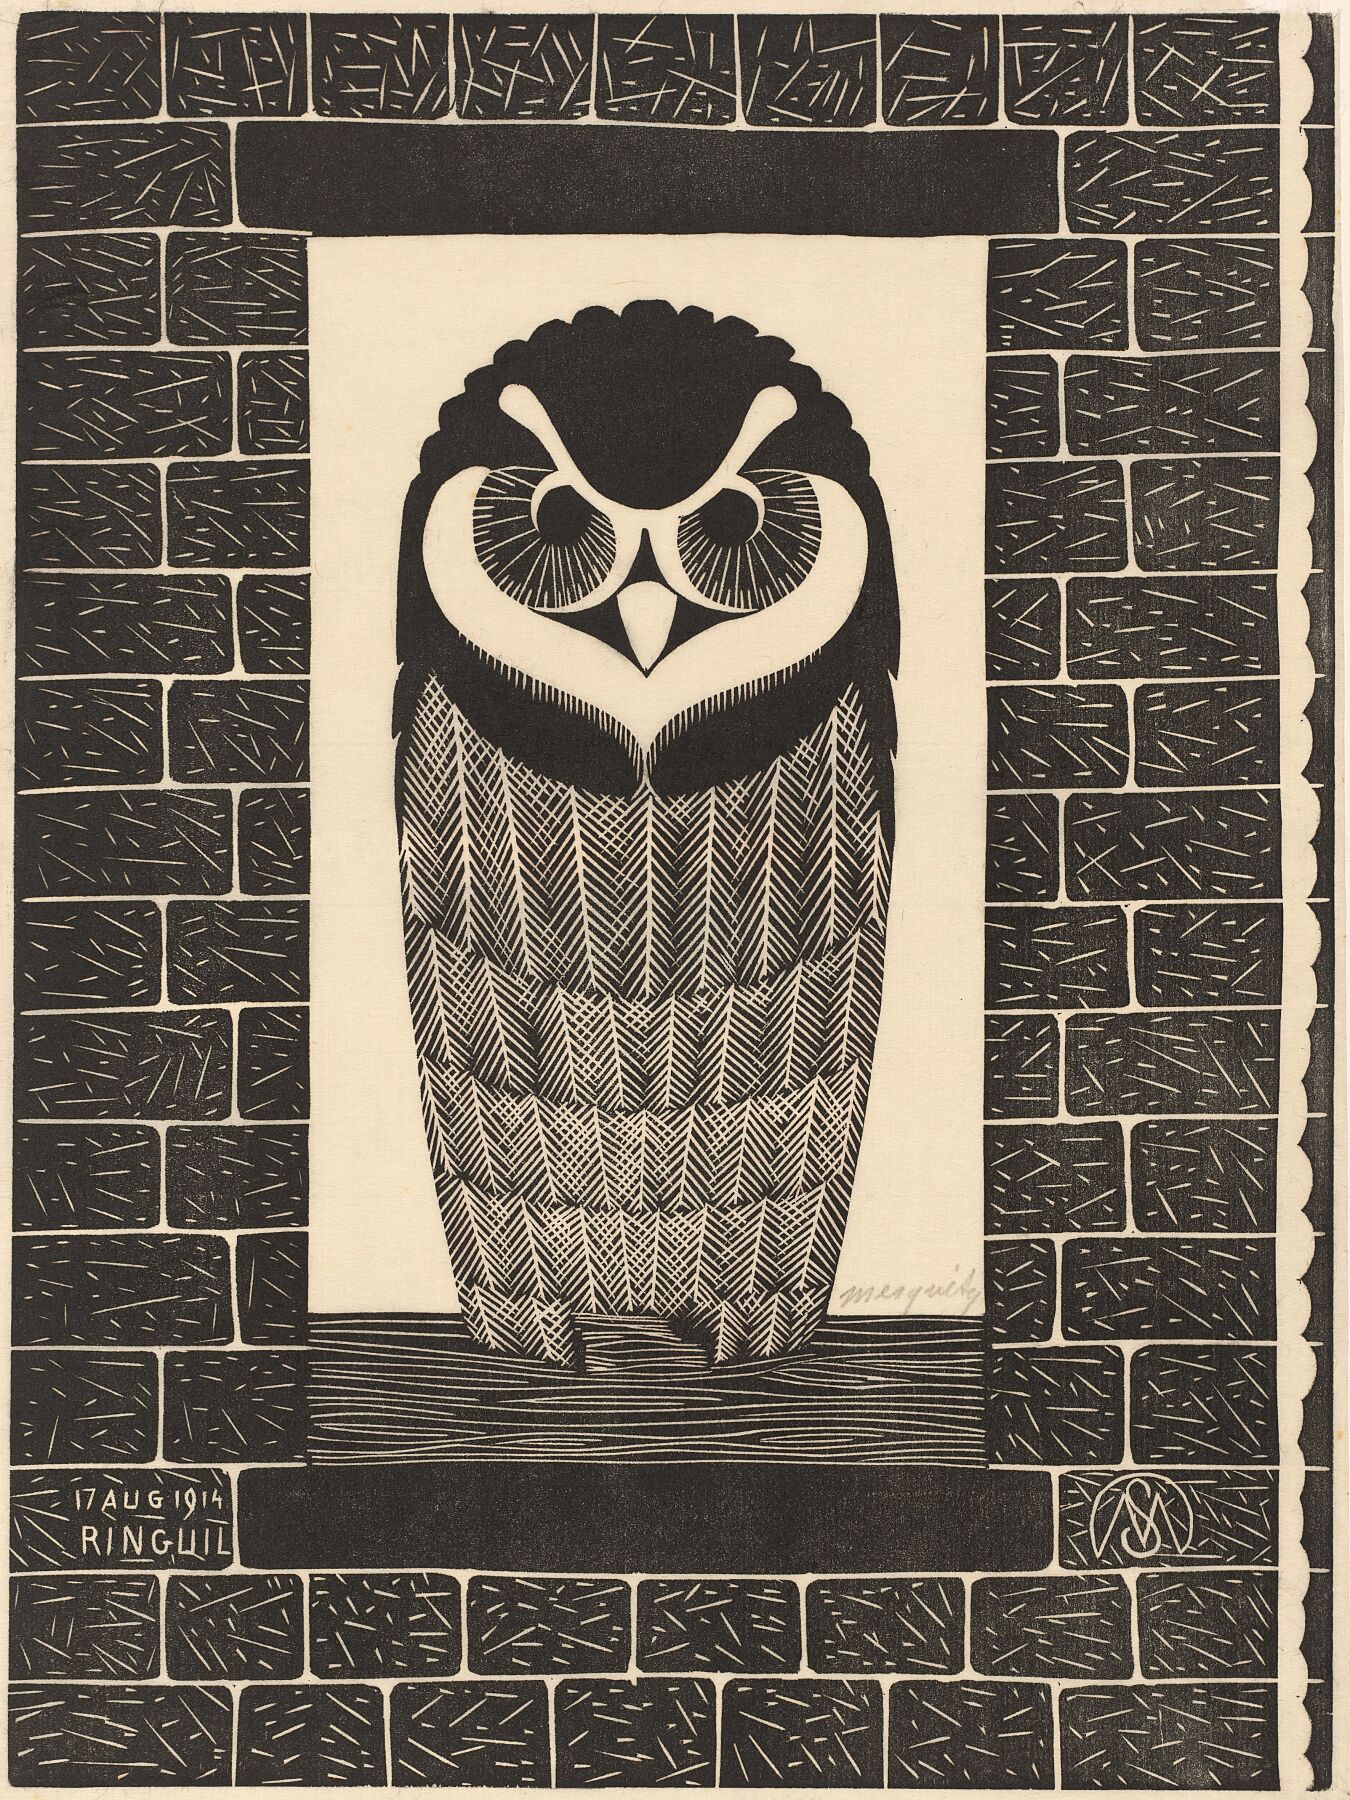 Ring Owl by Samuel Jessurun de Mesquita - 1914